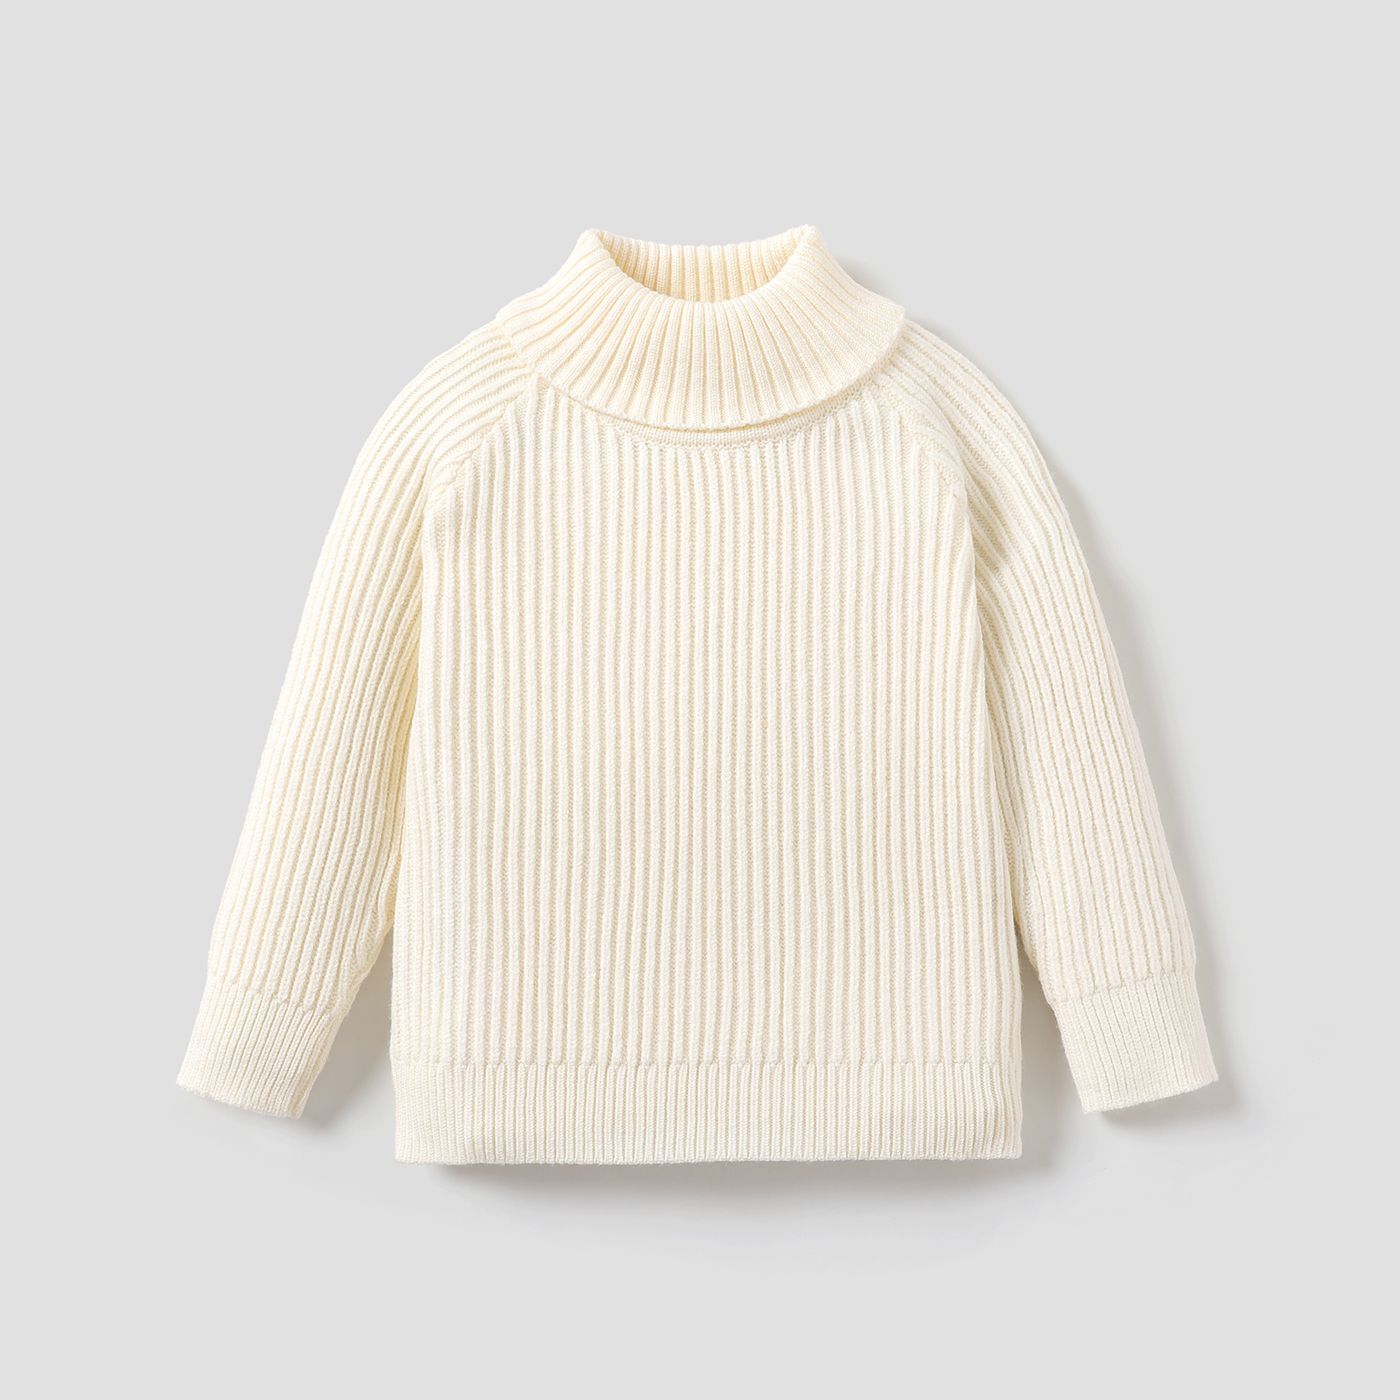 Toddler Girl/Toddler Boy Basic Solid Color Knit Sweater